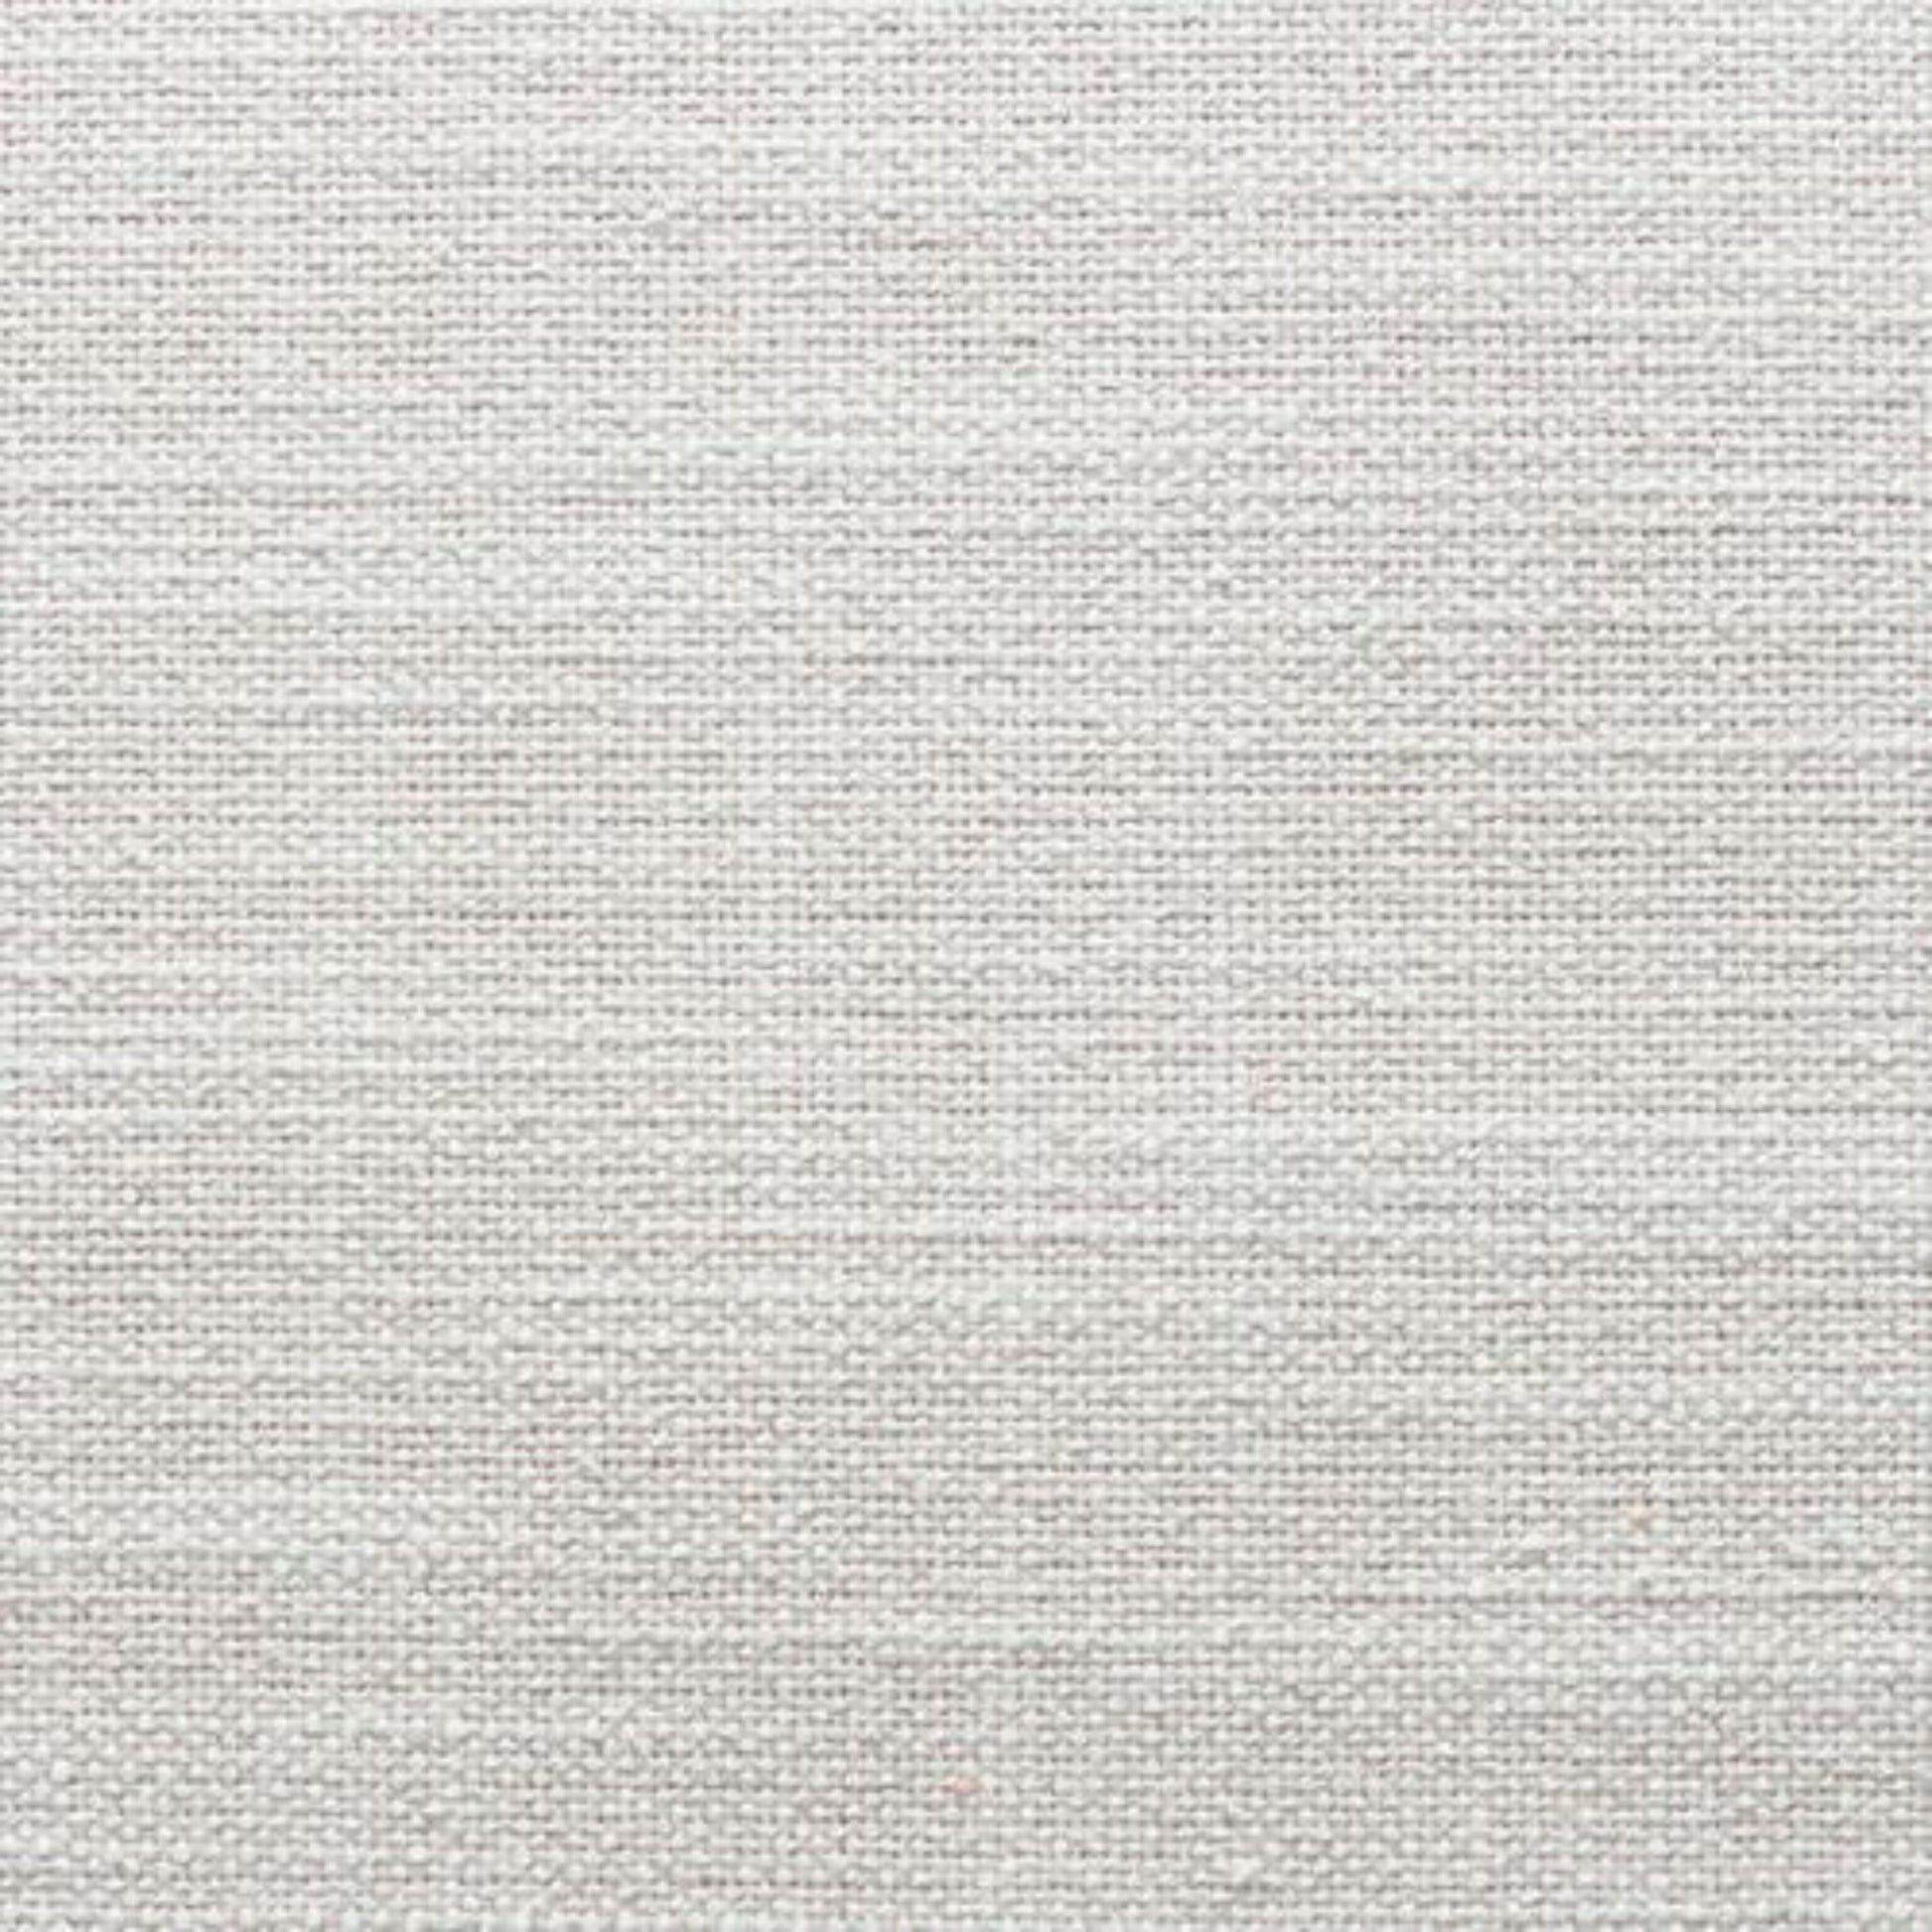 Calm white polyester blend fabric sofa